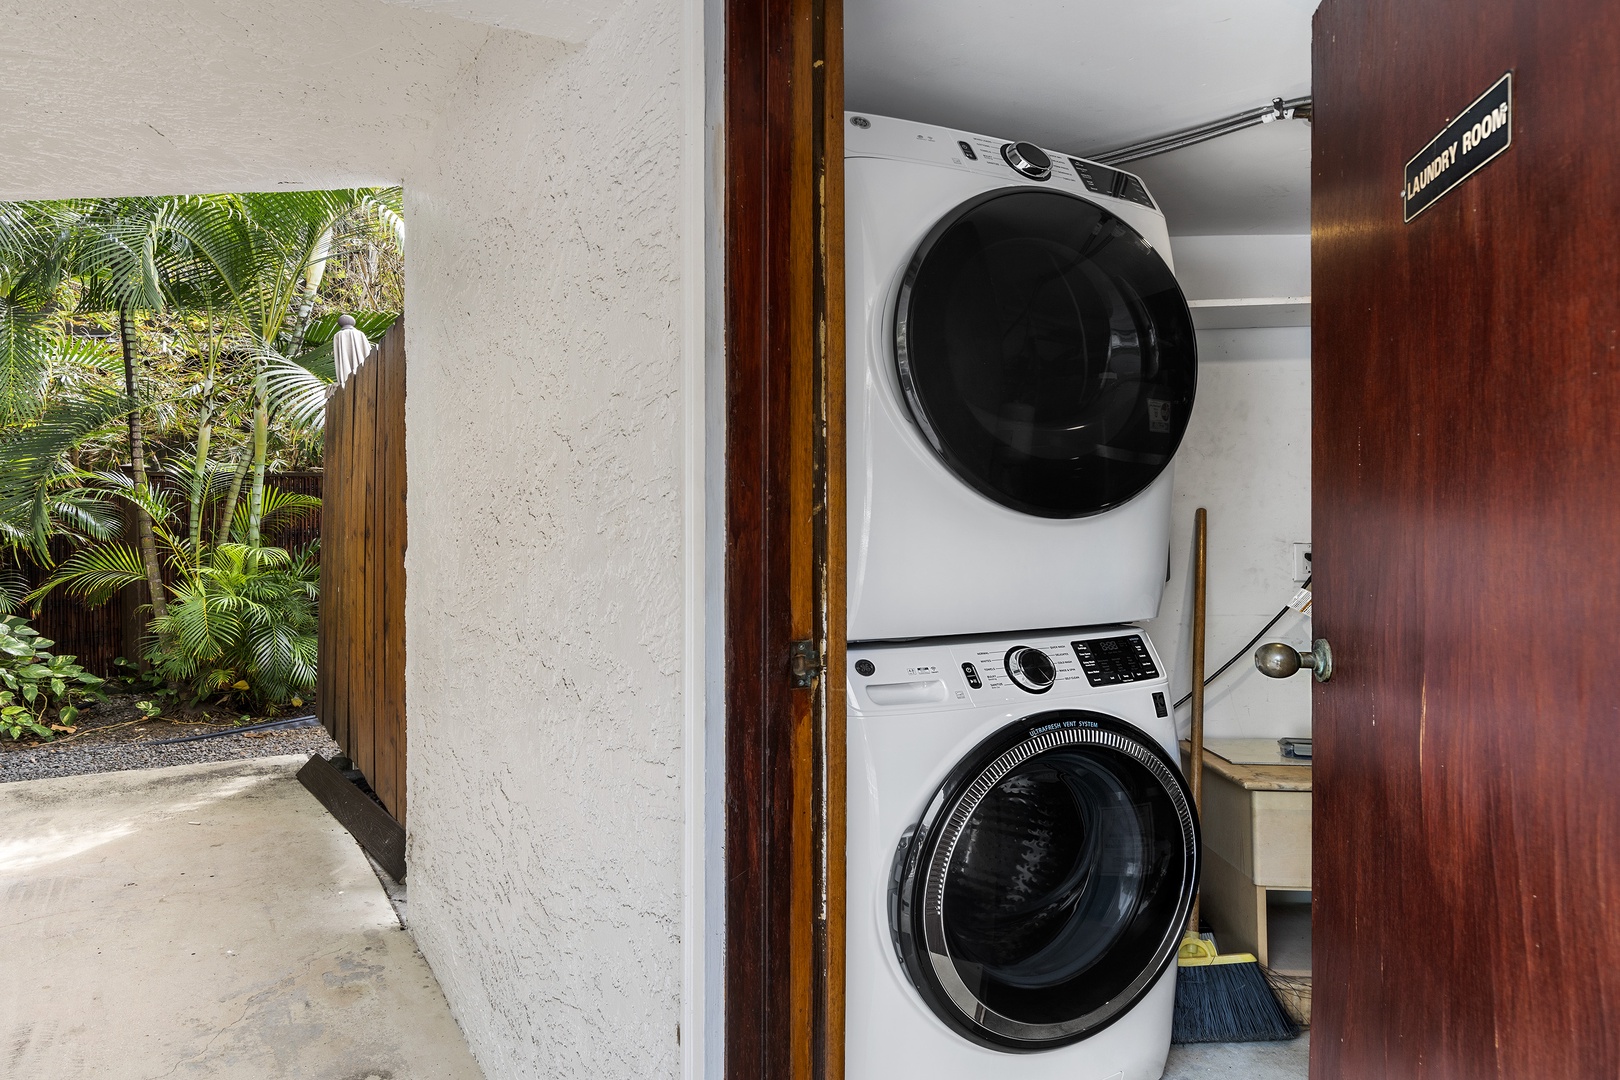 Kailua Kona Vacation Rentals, Kona's Shangri La - Detached laundry room with commercial sized washer/dryer